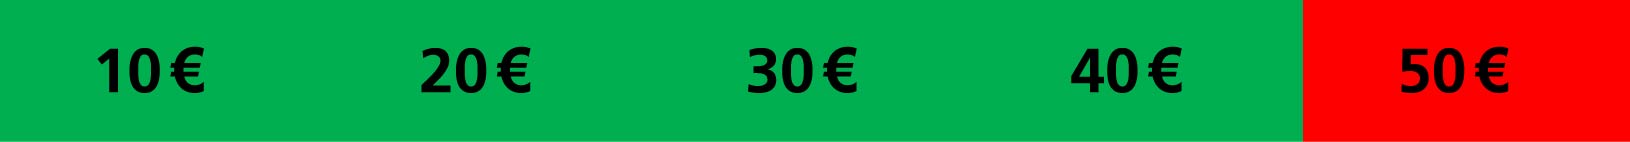 50er 40 Euro